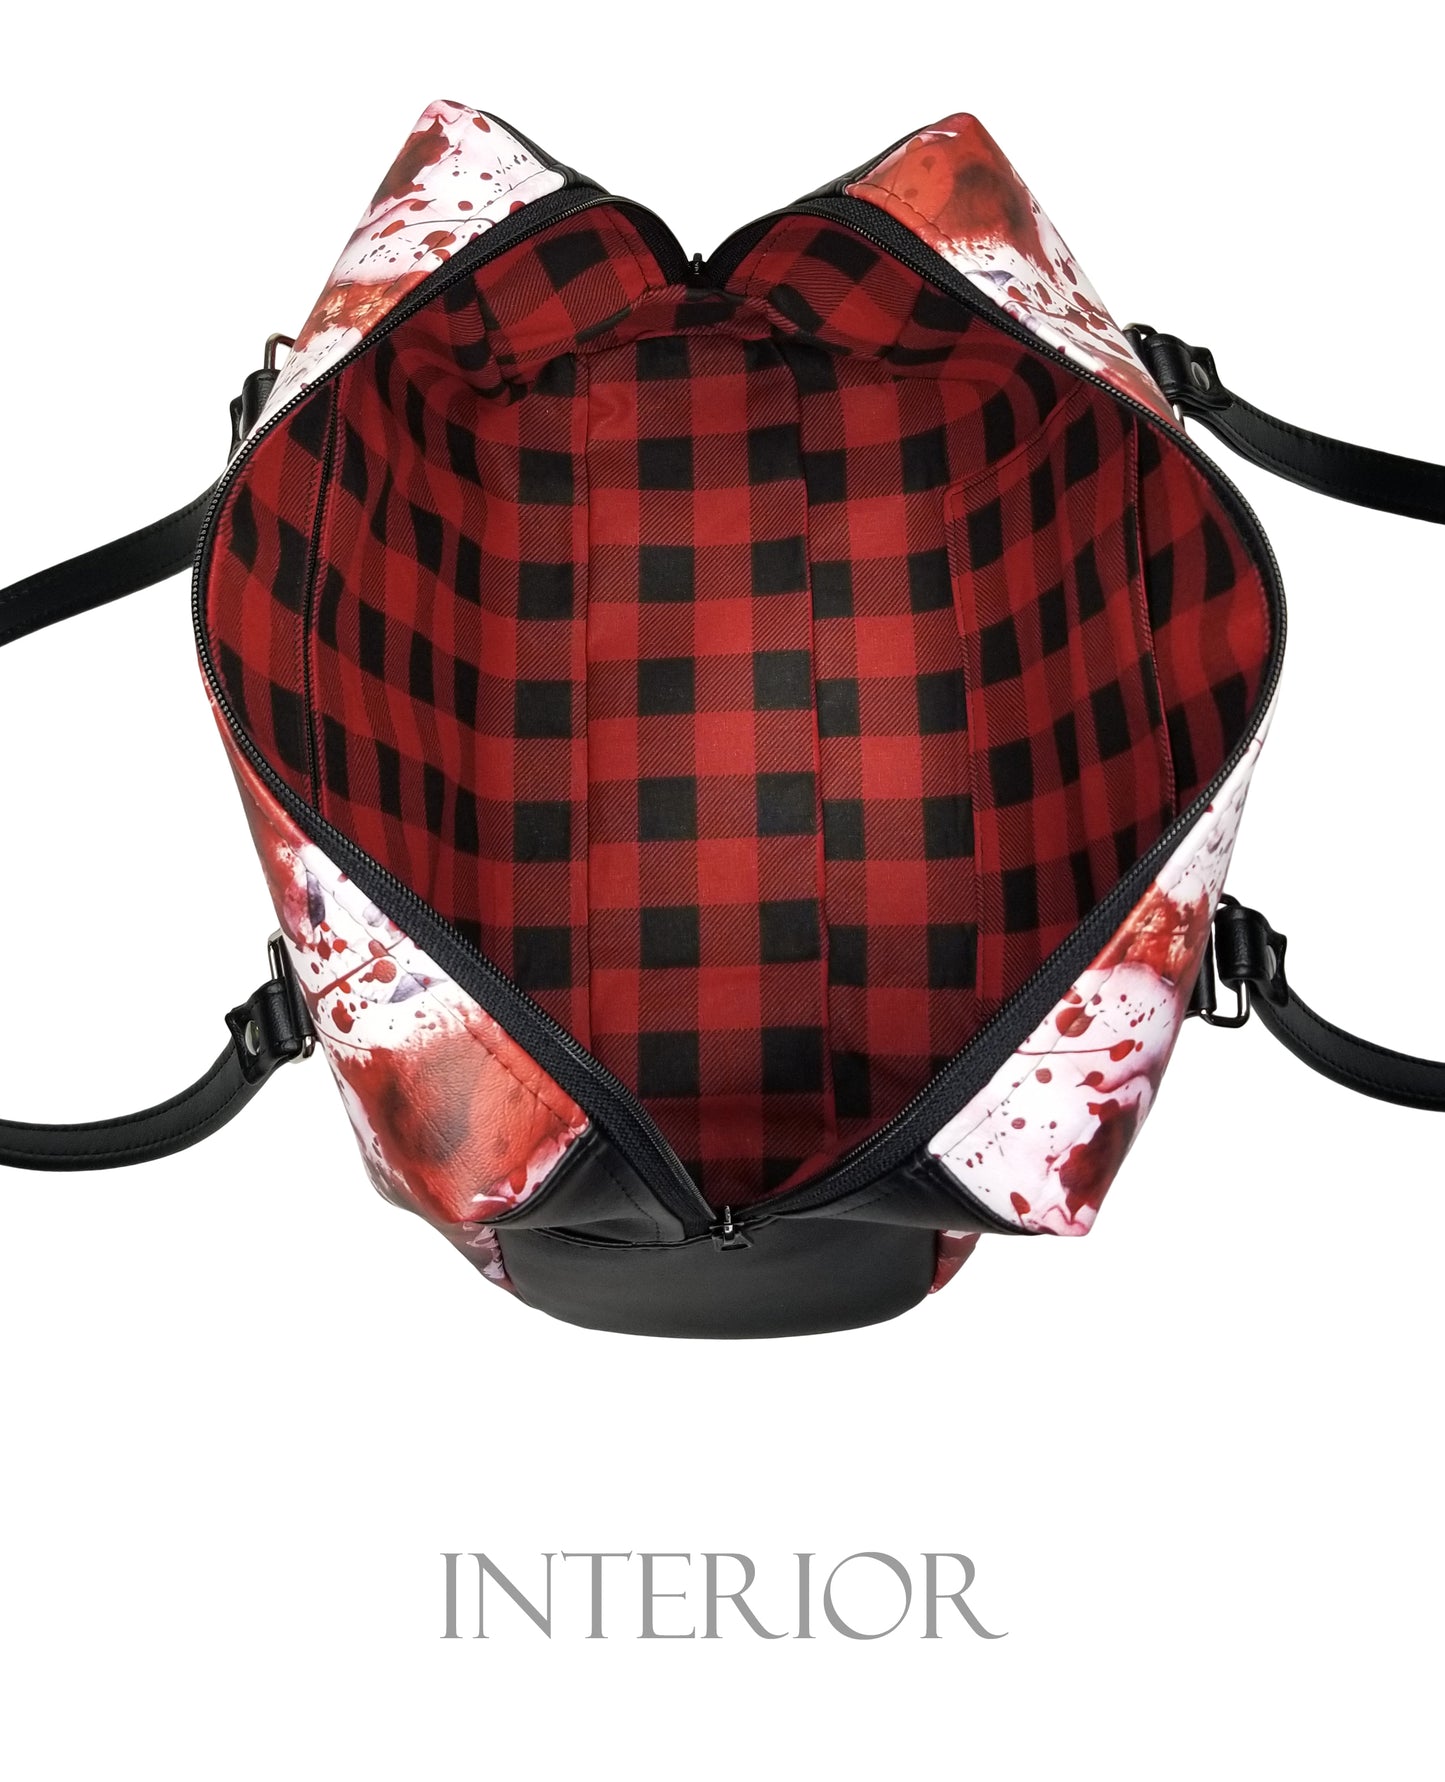 Bloody Gorgeous- Colette Handbag